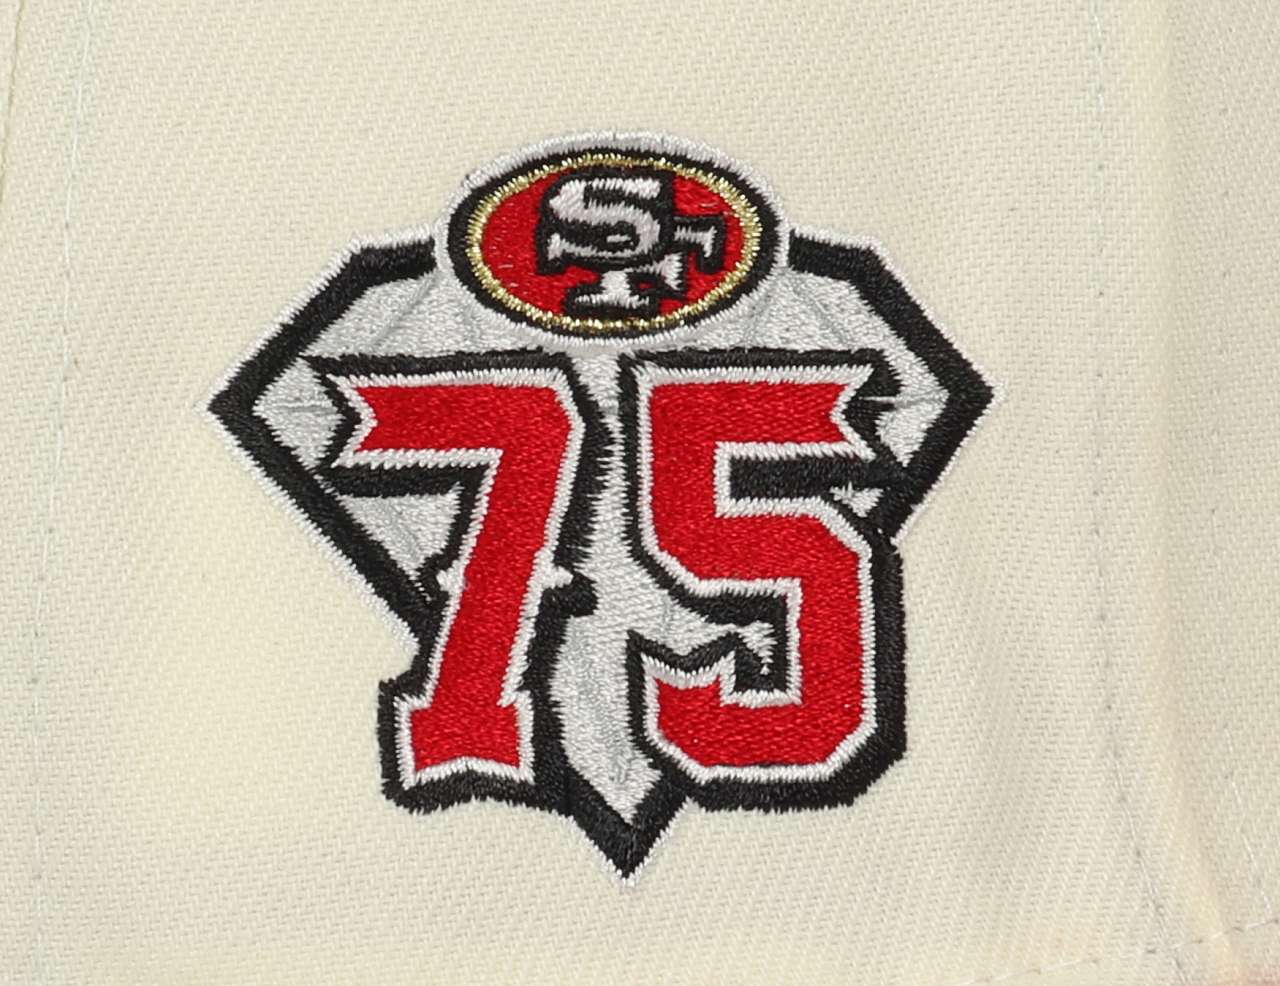 San Francisco 49ers NFL 75th anniversary Sidepatch Chrome 9Fifty Snapback Cap New Era